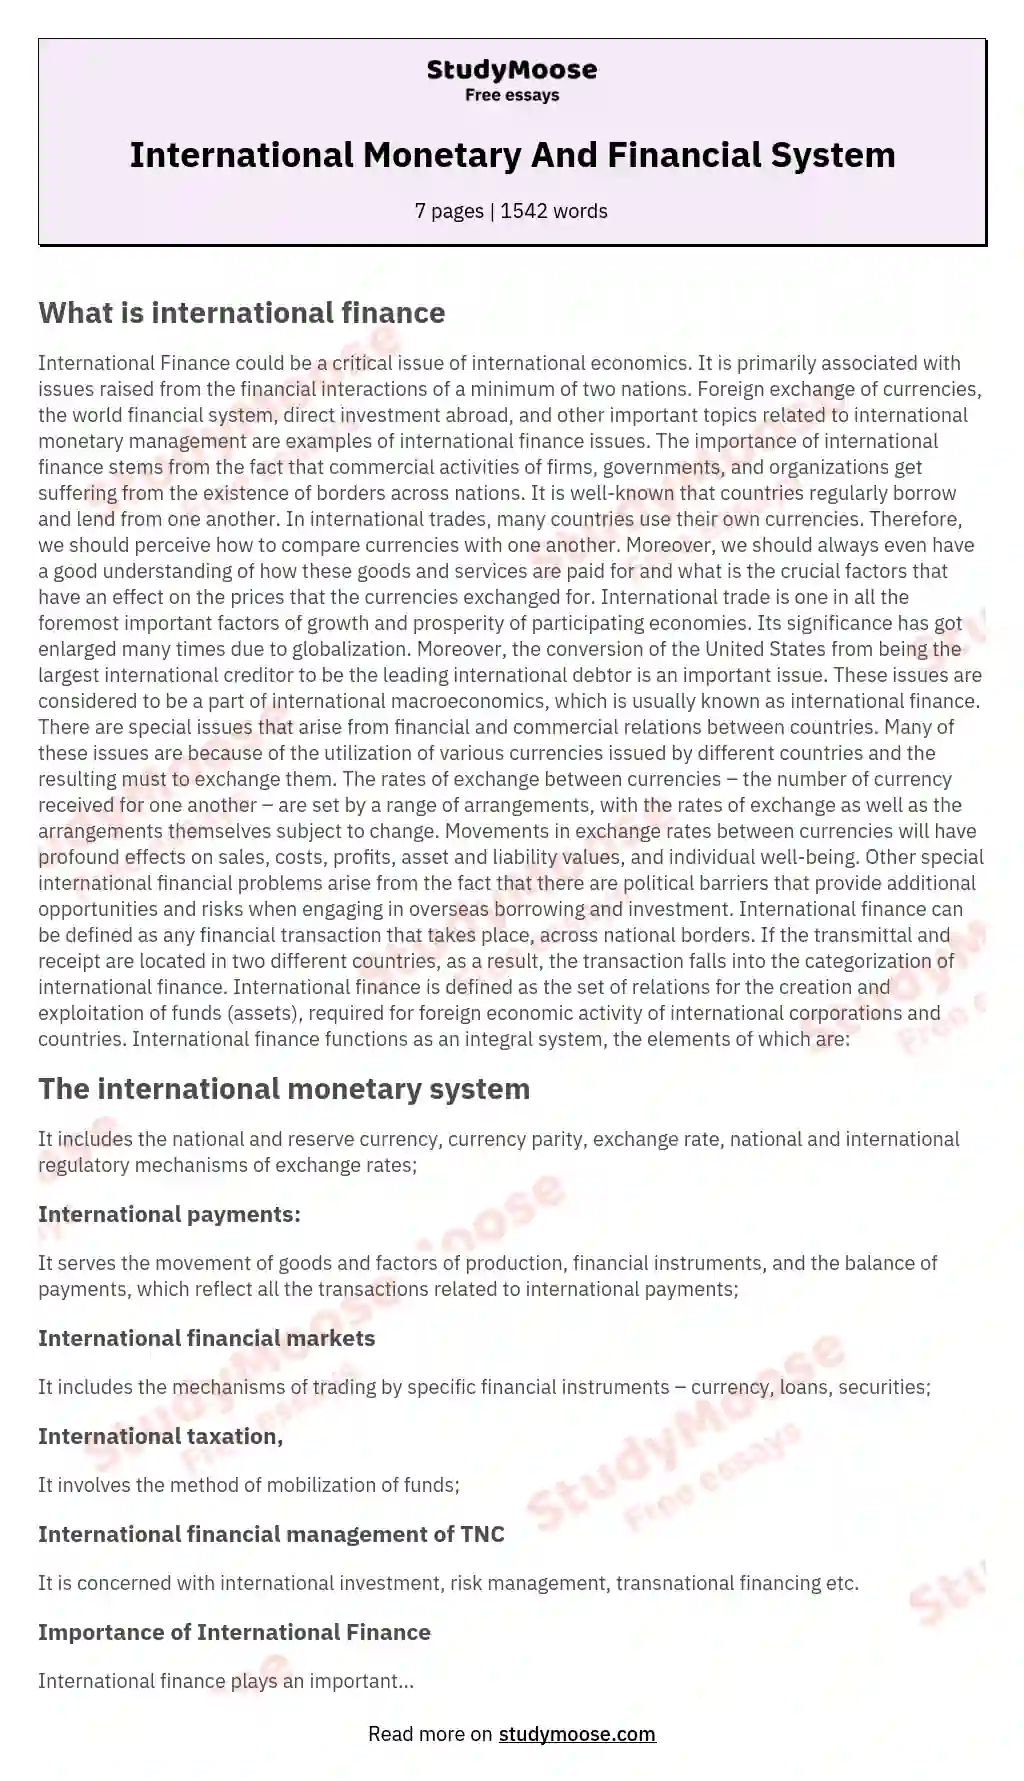 International Monetary And Financial System essay